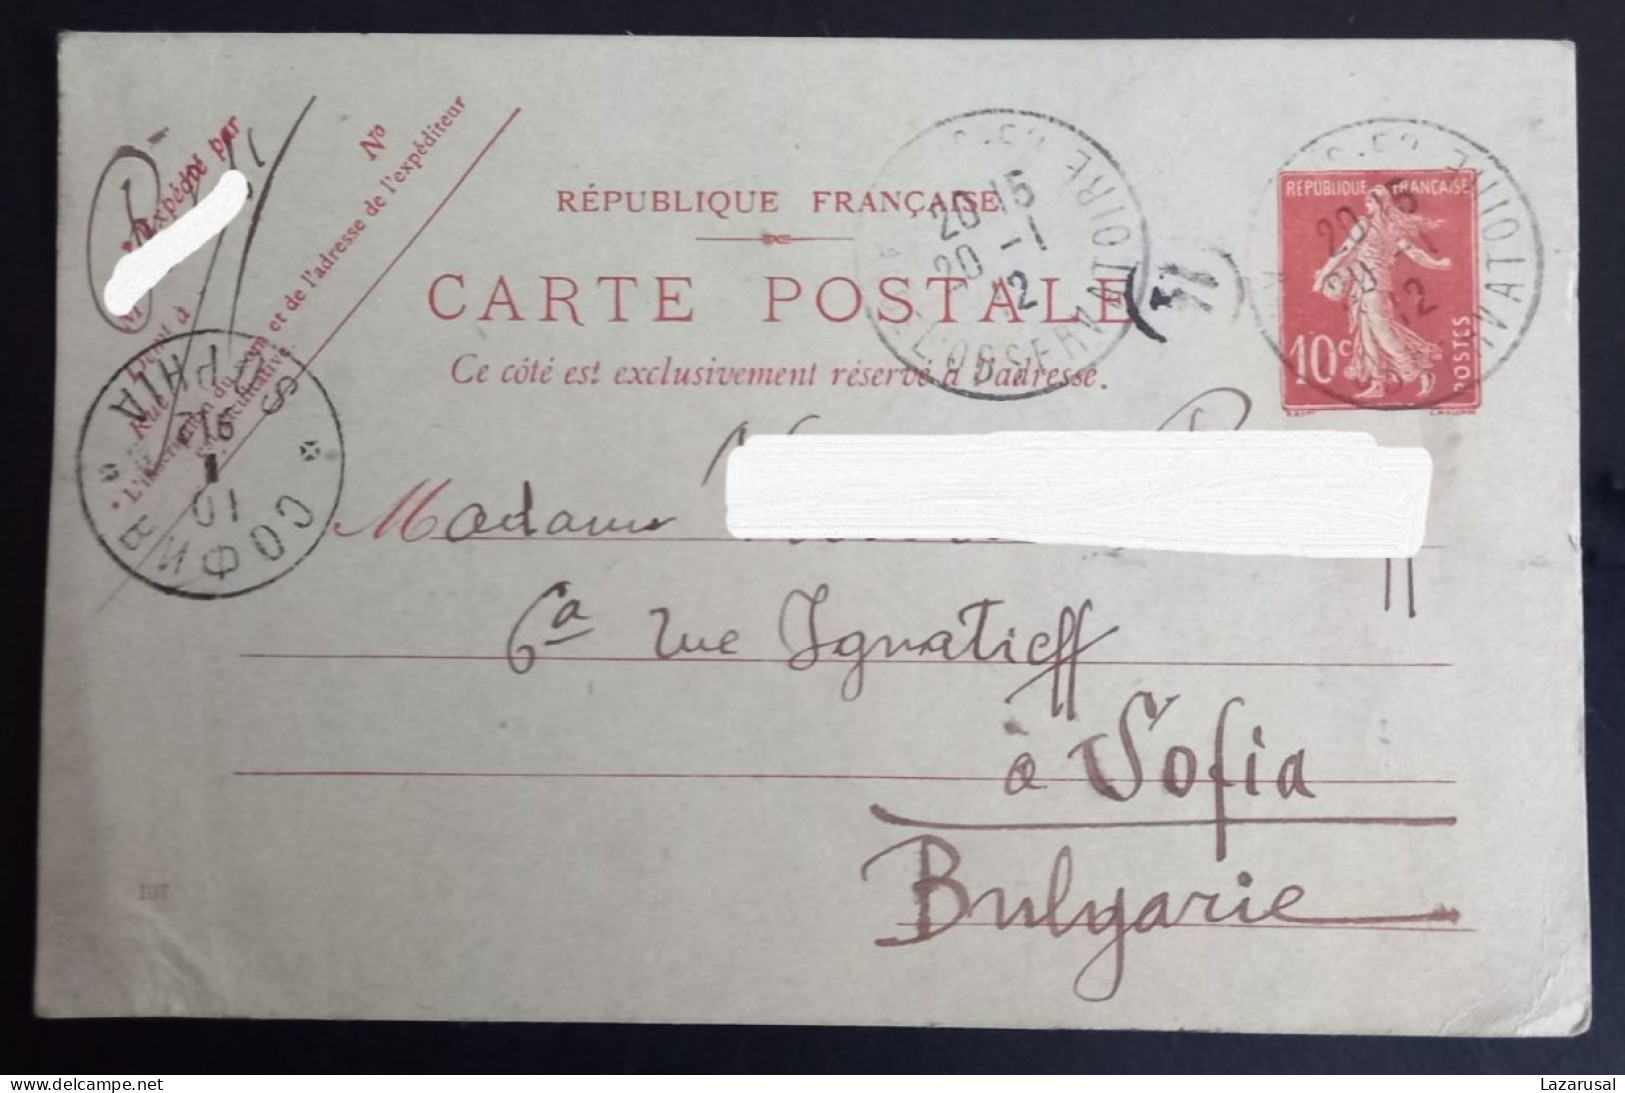 Lot #1  France Stationery Sent To Bulgaria Sofia Balkan War 1912 - Kartenbriefe